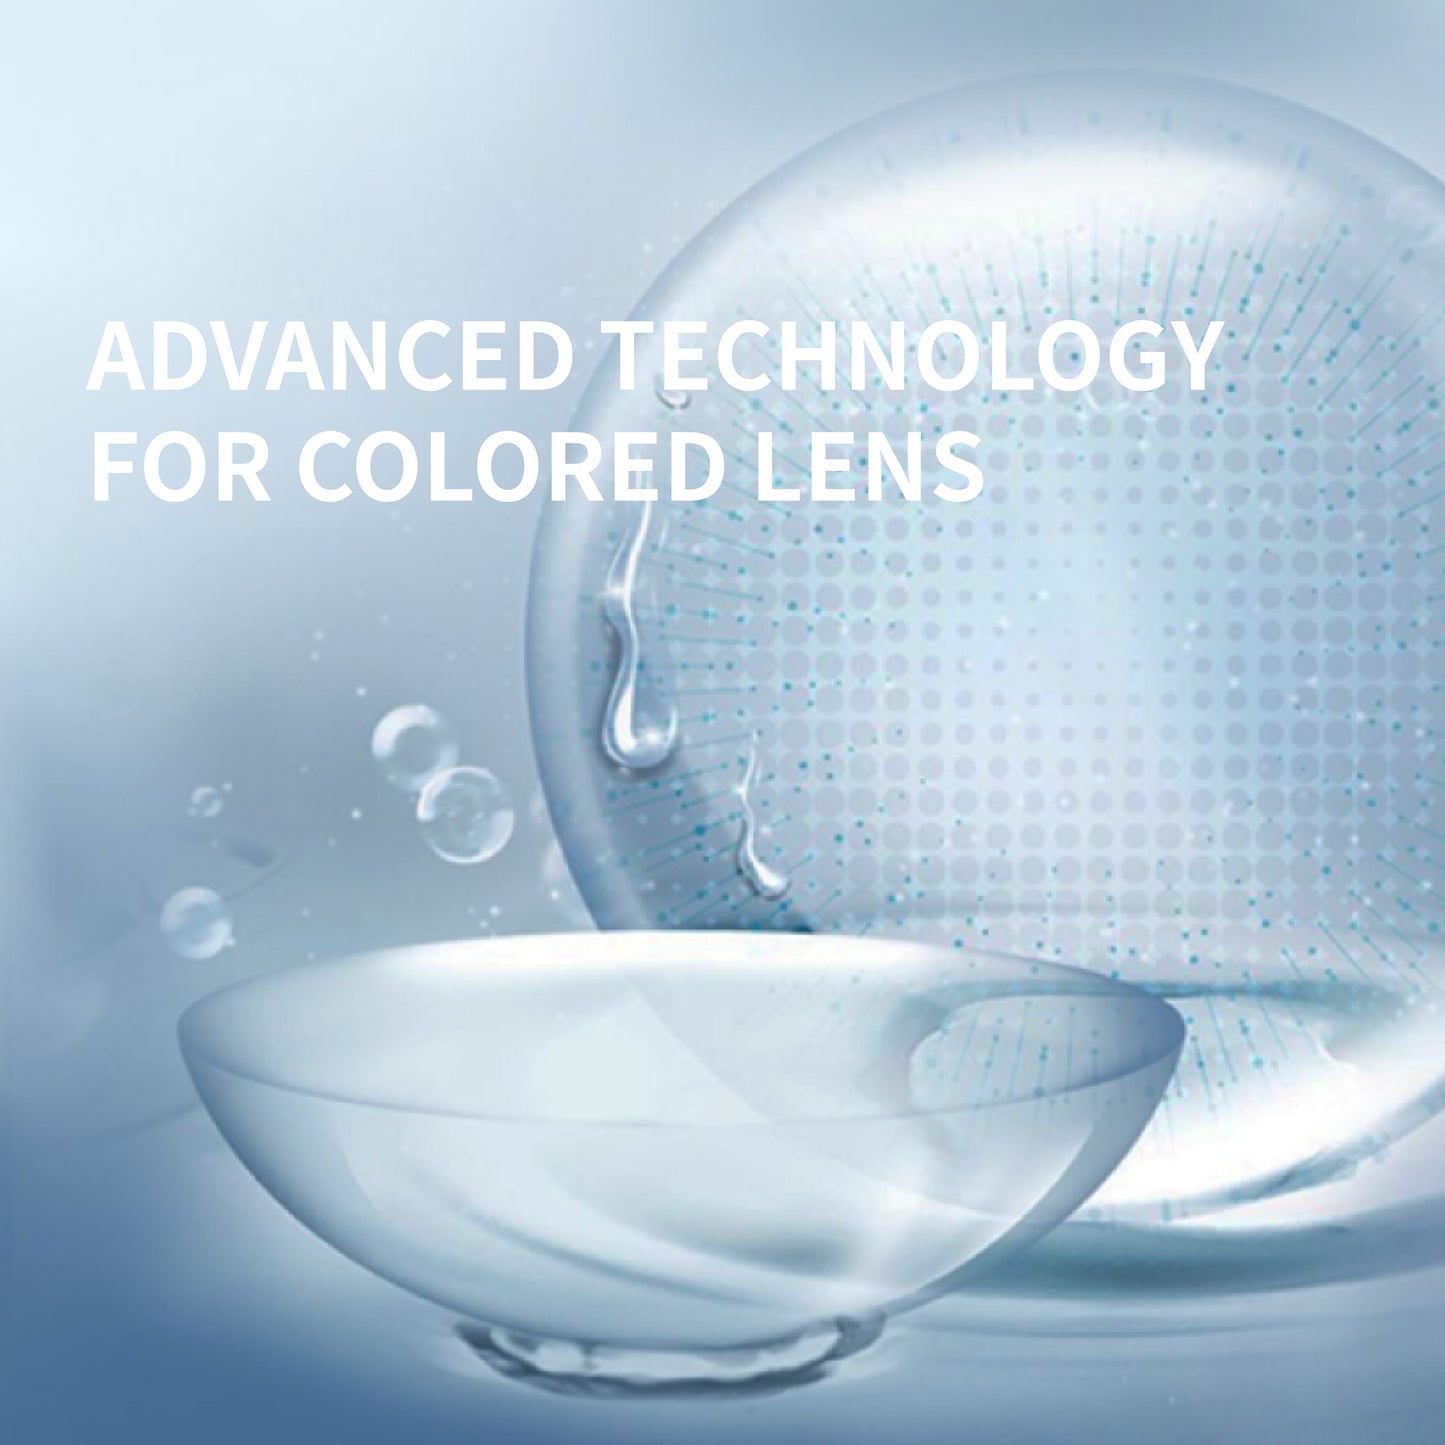  1Pcs FDA Certificate Eyes Colorful Contact Lenses - Vibrancy gray